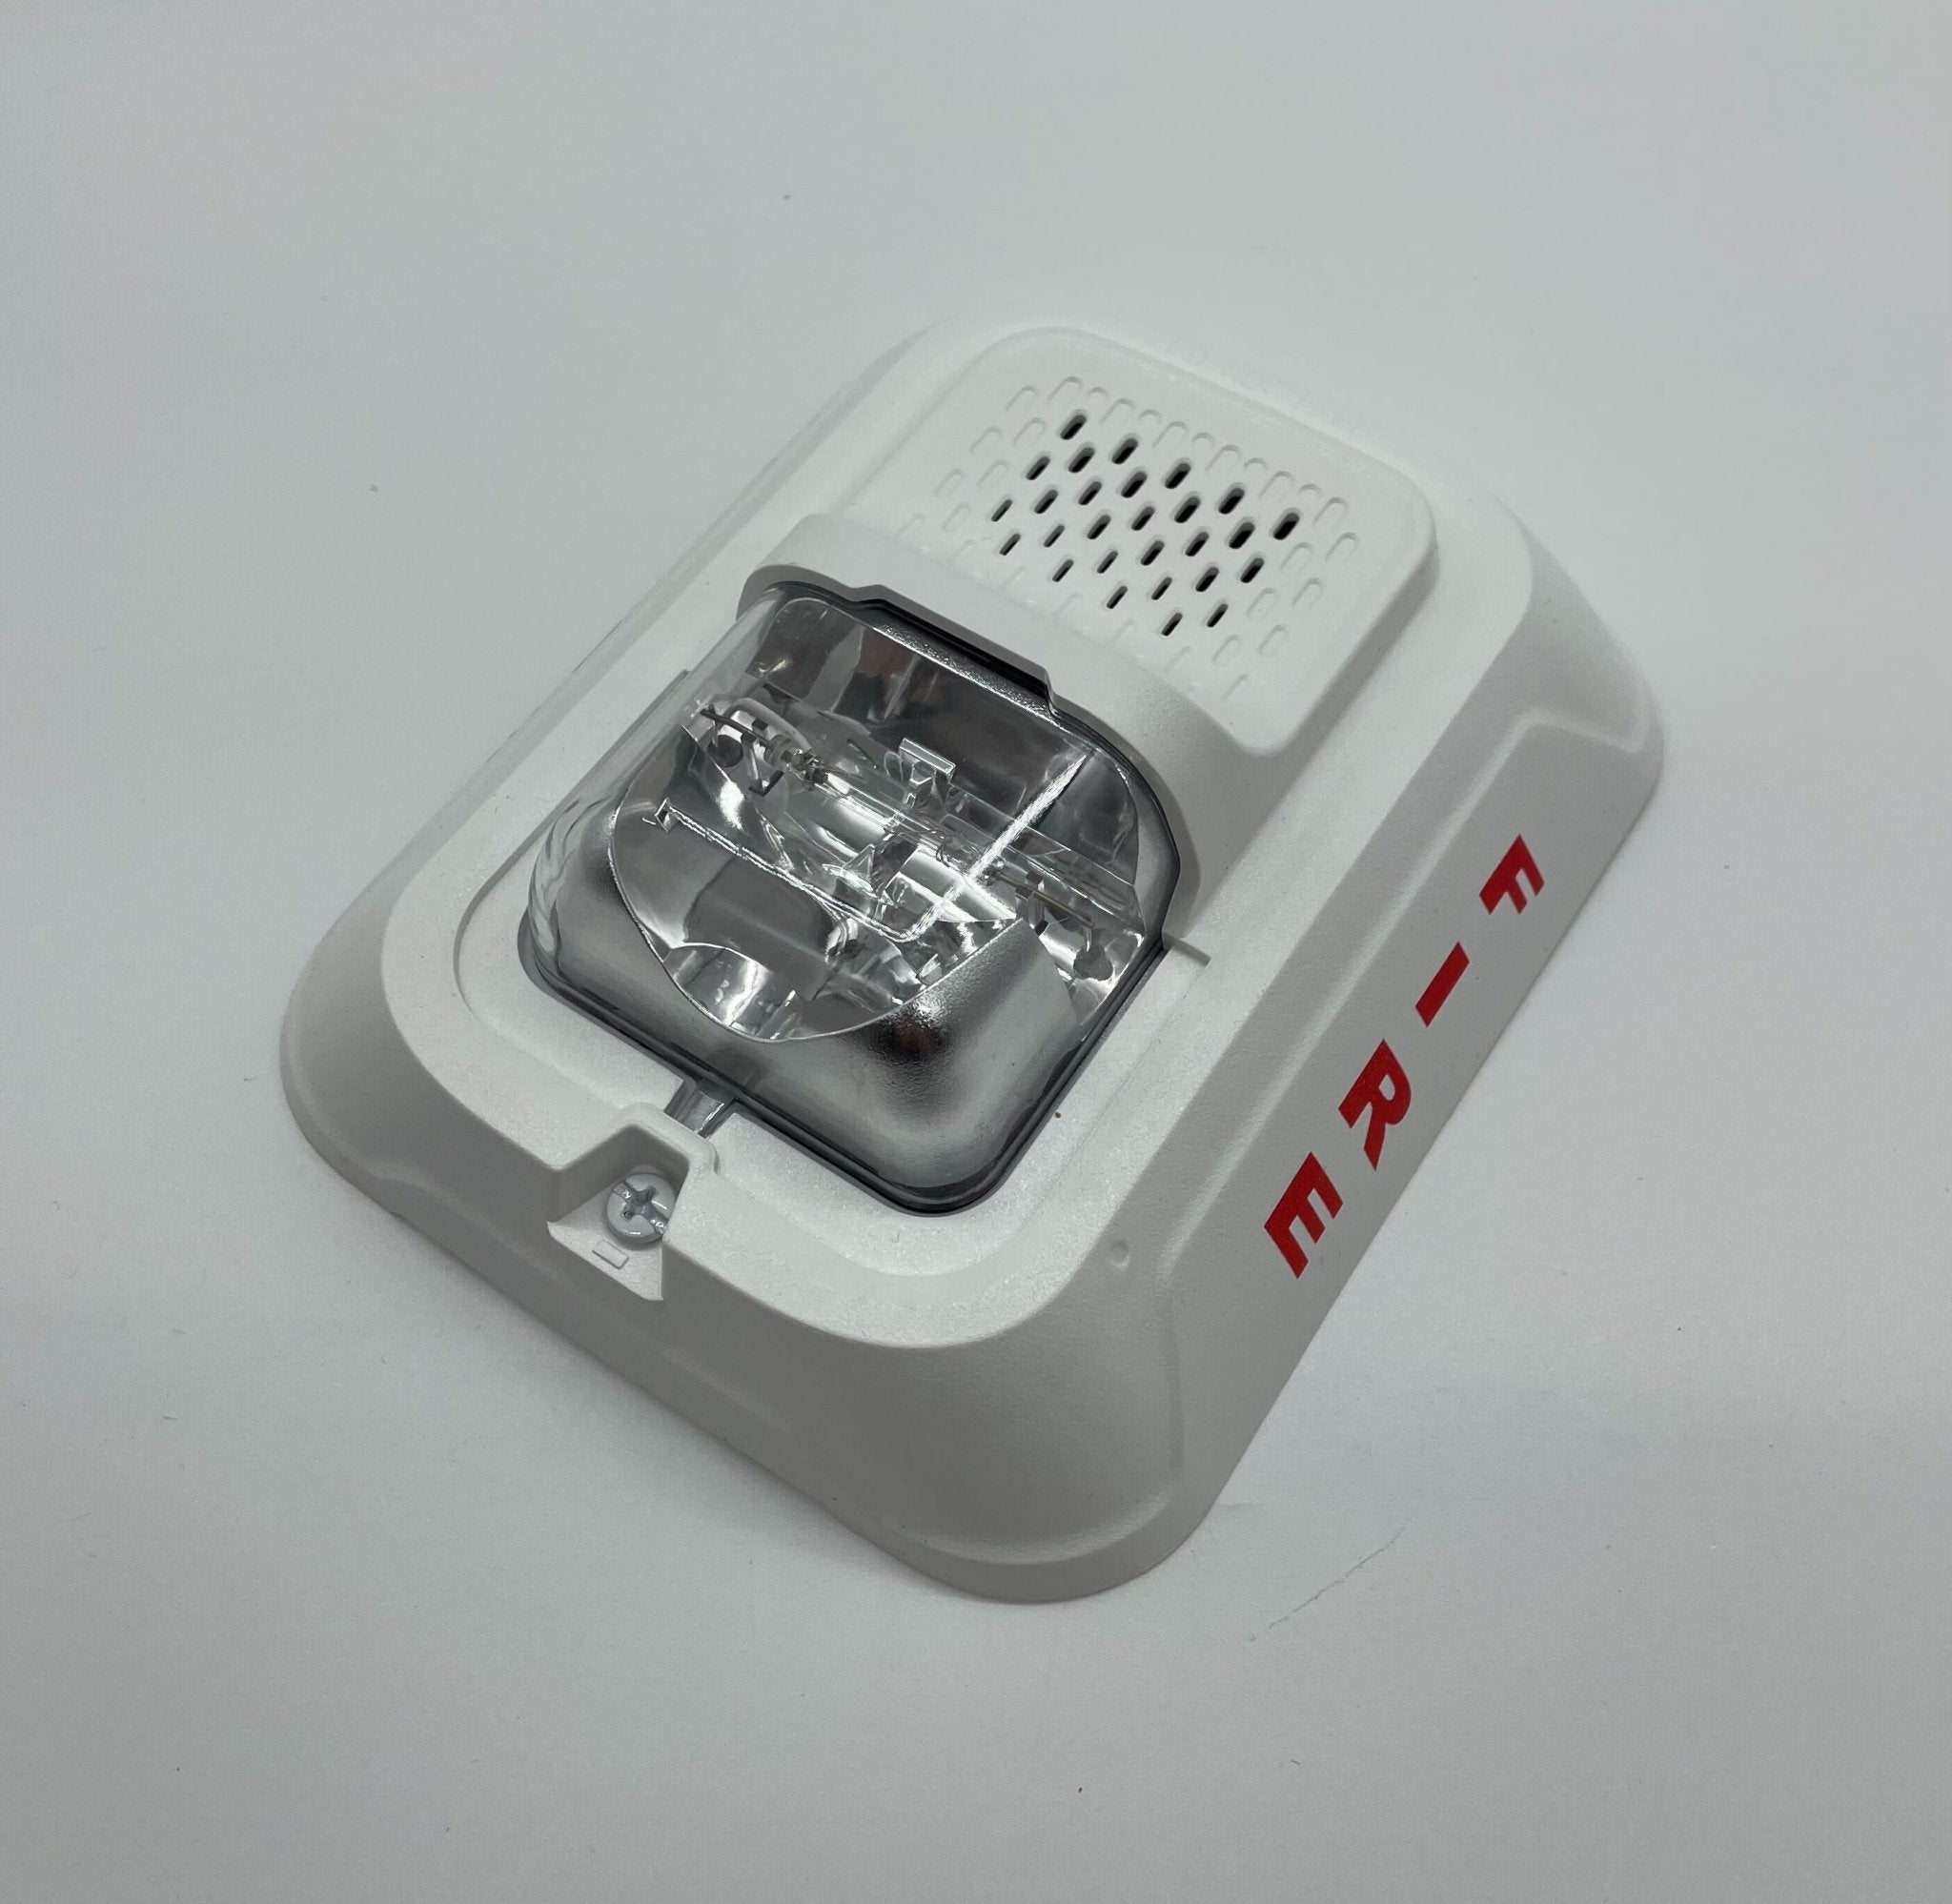 System Sensor P4WL - The Fire Alarm Supplier